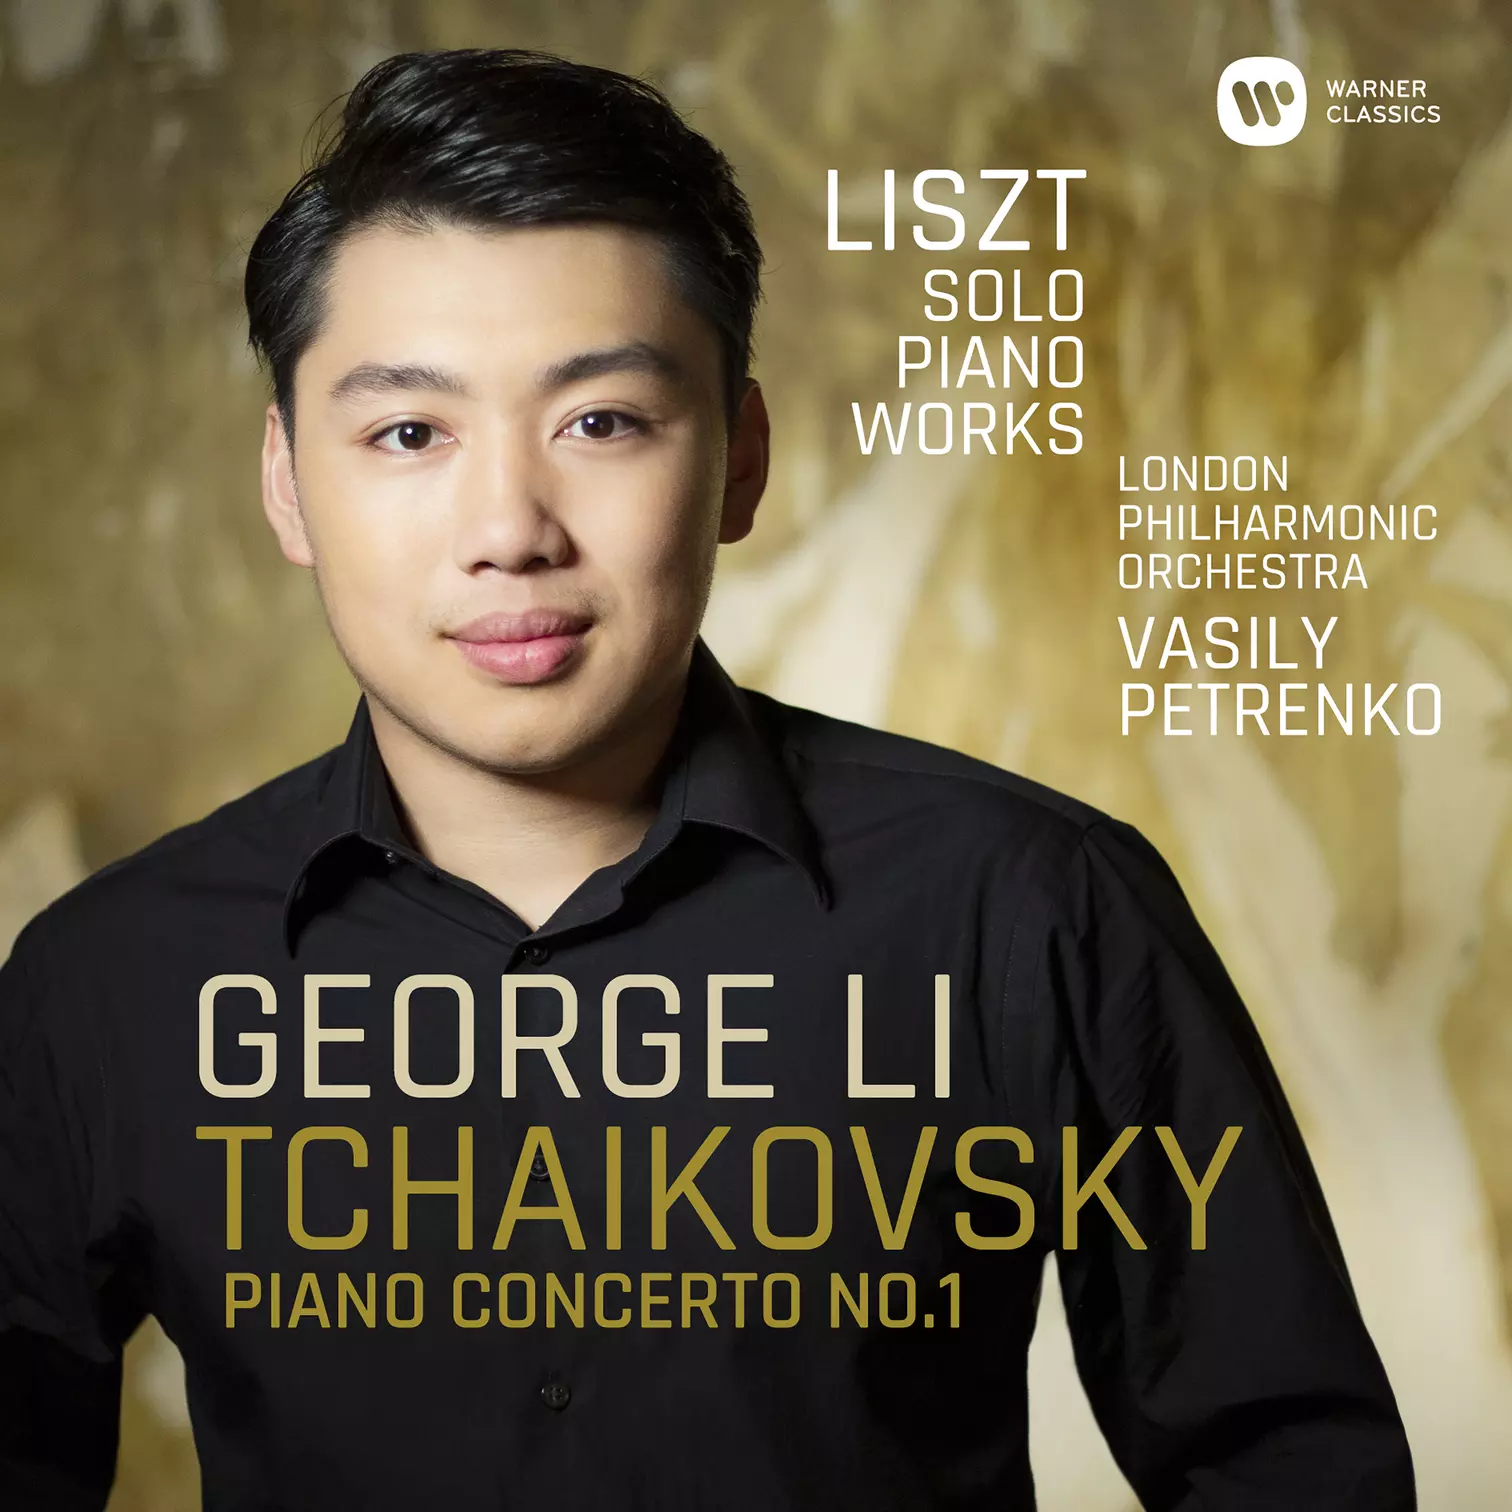 Tchaikovsky Piano concerto No.1 - Liszt Solo Piano Works